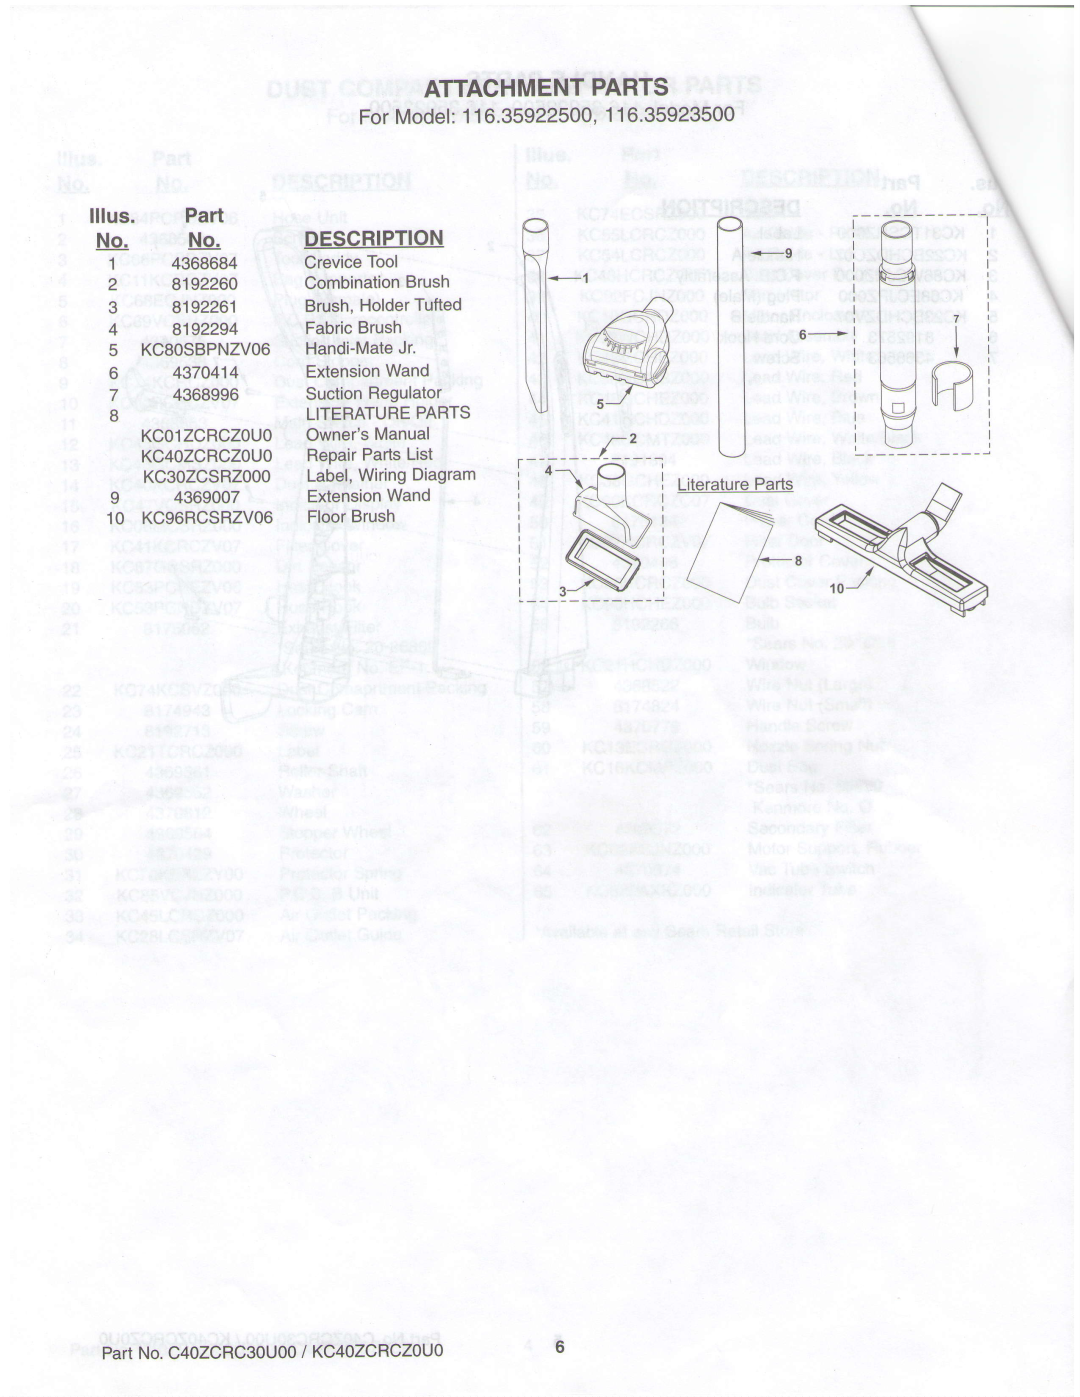 Sears owner manual Attachmentparts, lllus. Part, ForModel116.35922500,116.35923500 